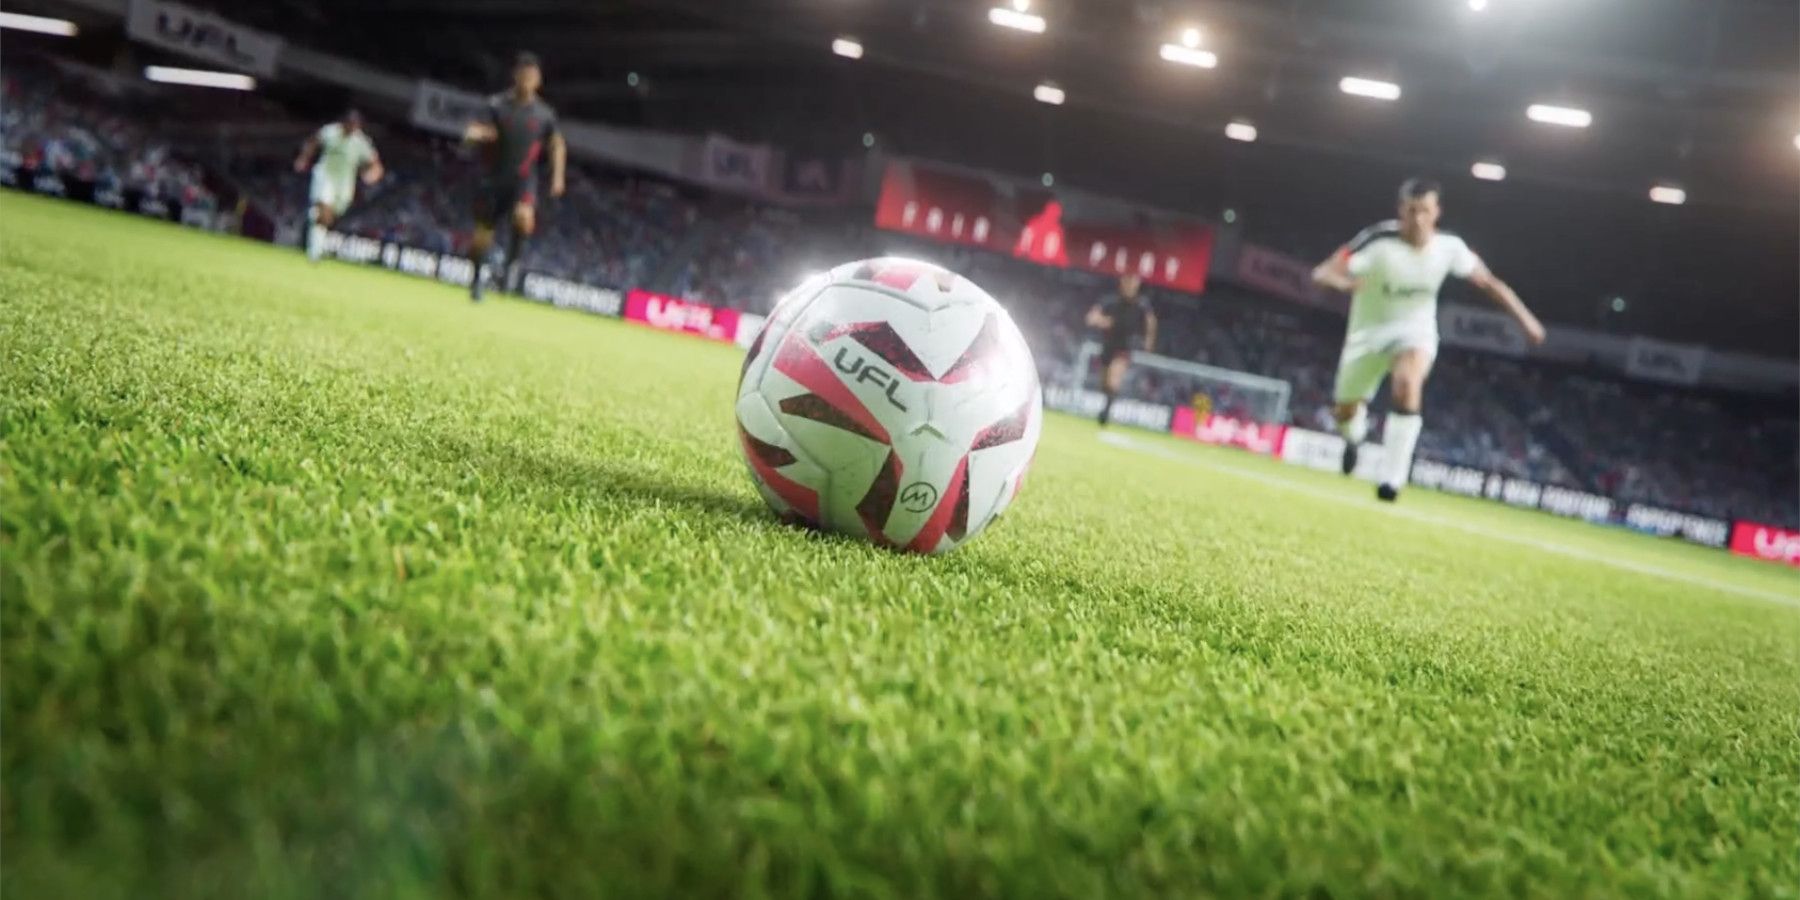 ufl-soccer-game-gamescom-world-premiere